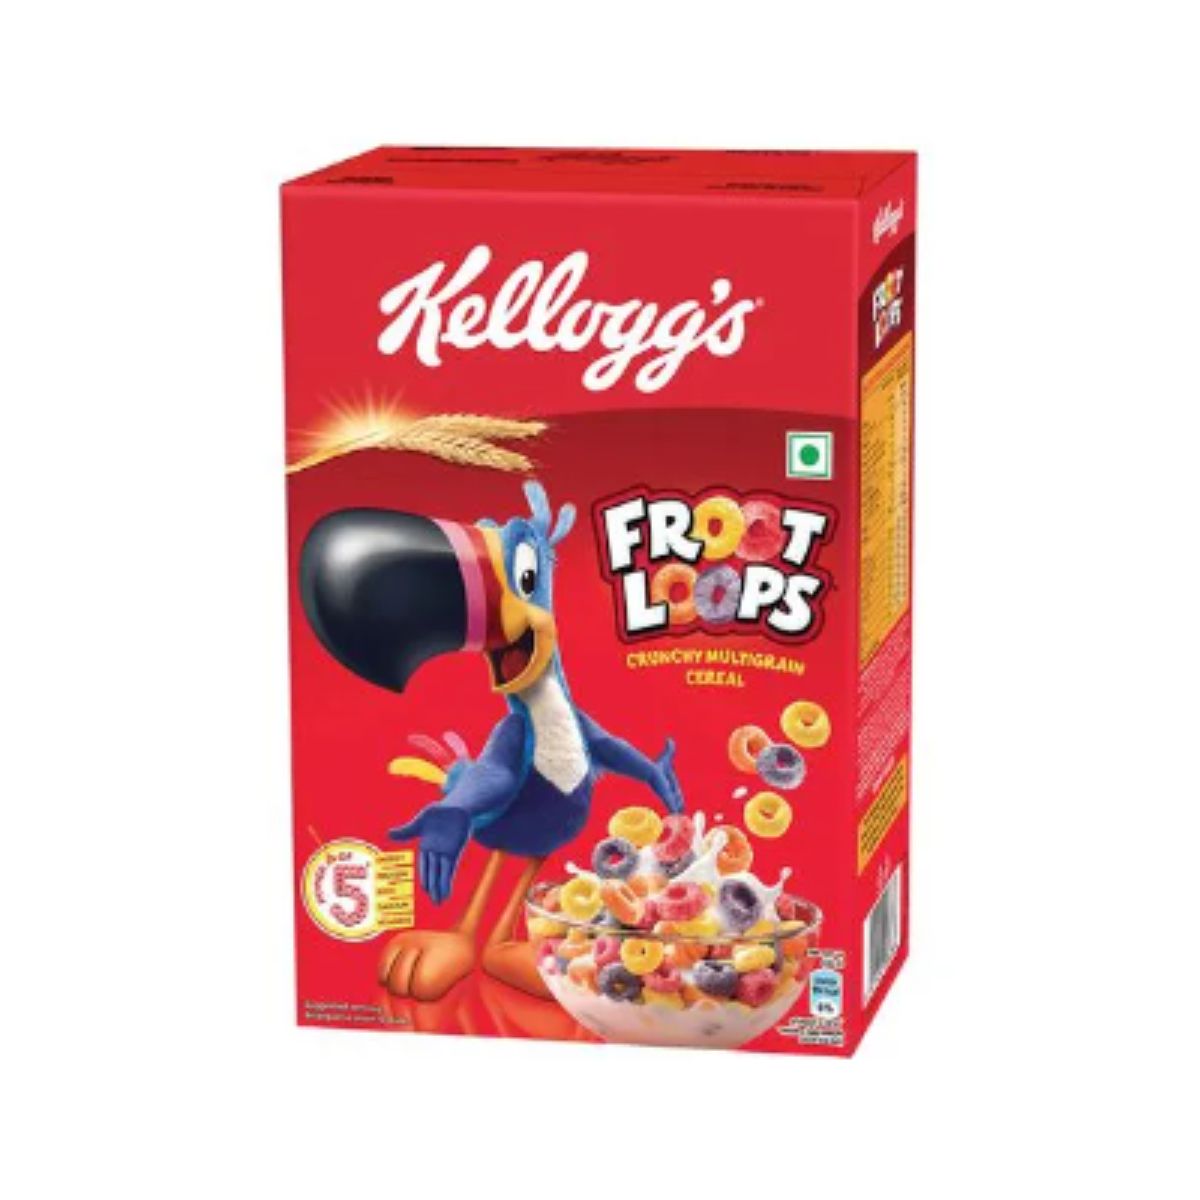 Kellogg's Froot Loops - Crunchy Multigrain Cereal - 285g